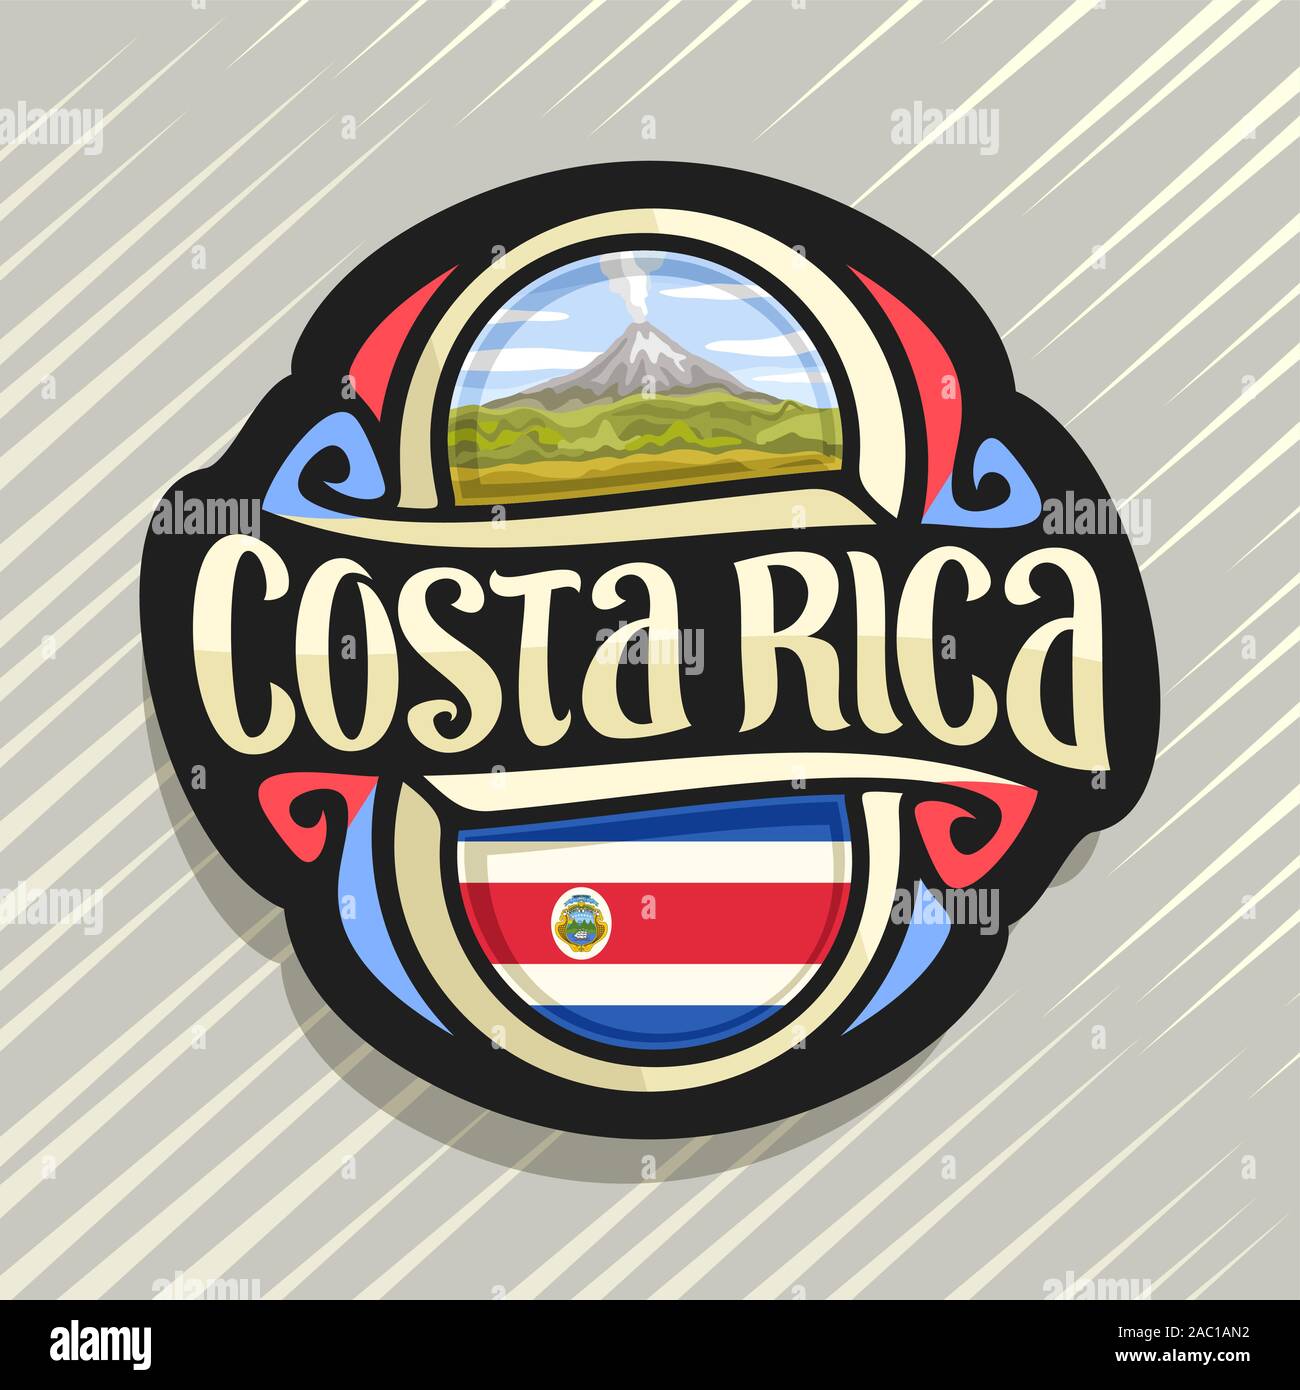 Costa Rica Bandera Nacional Colores Alta Calidad Imán de Nevera 